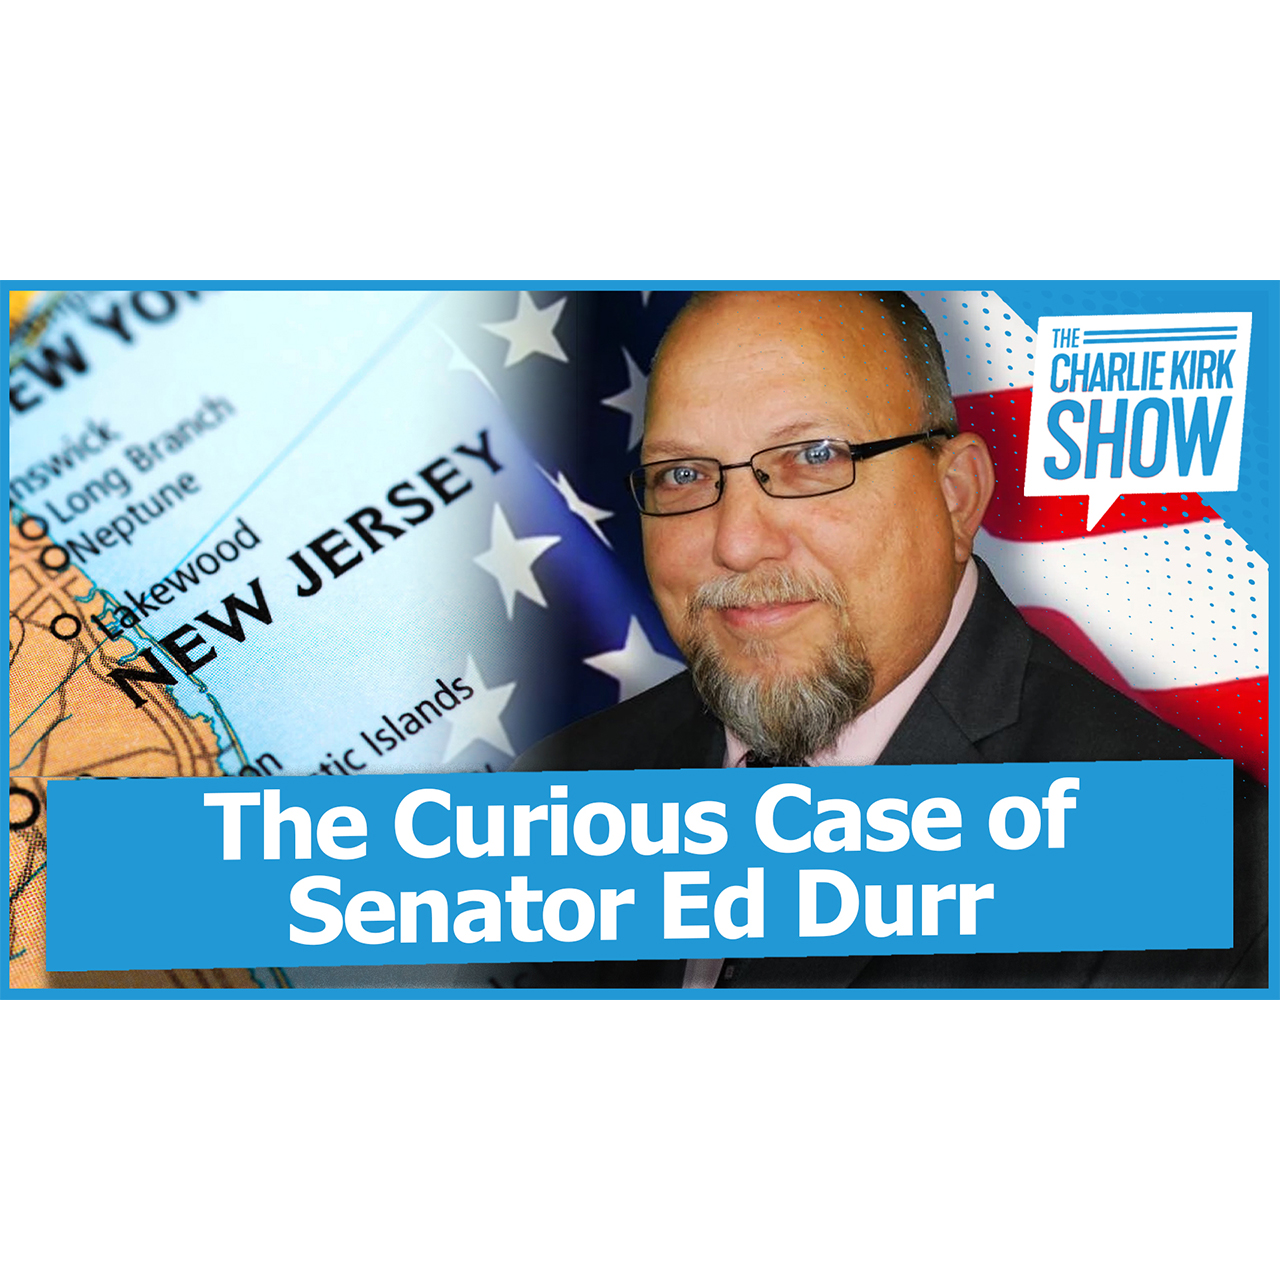 The Curious Case of Senator Ed Durr